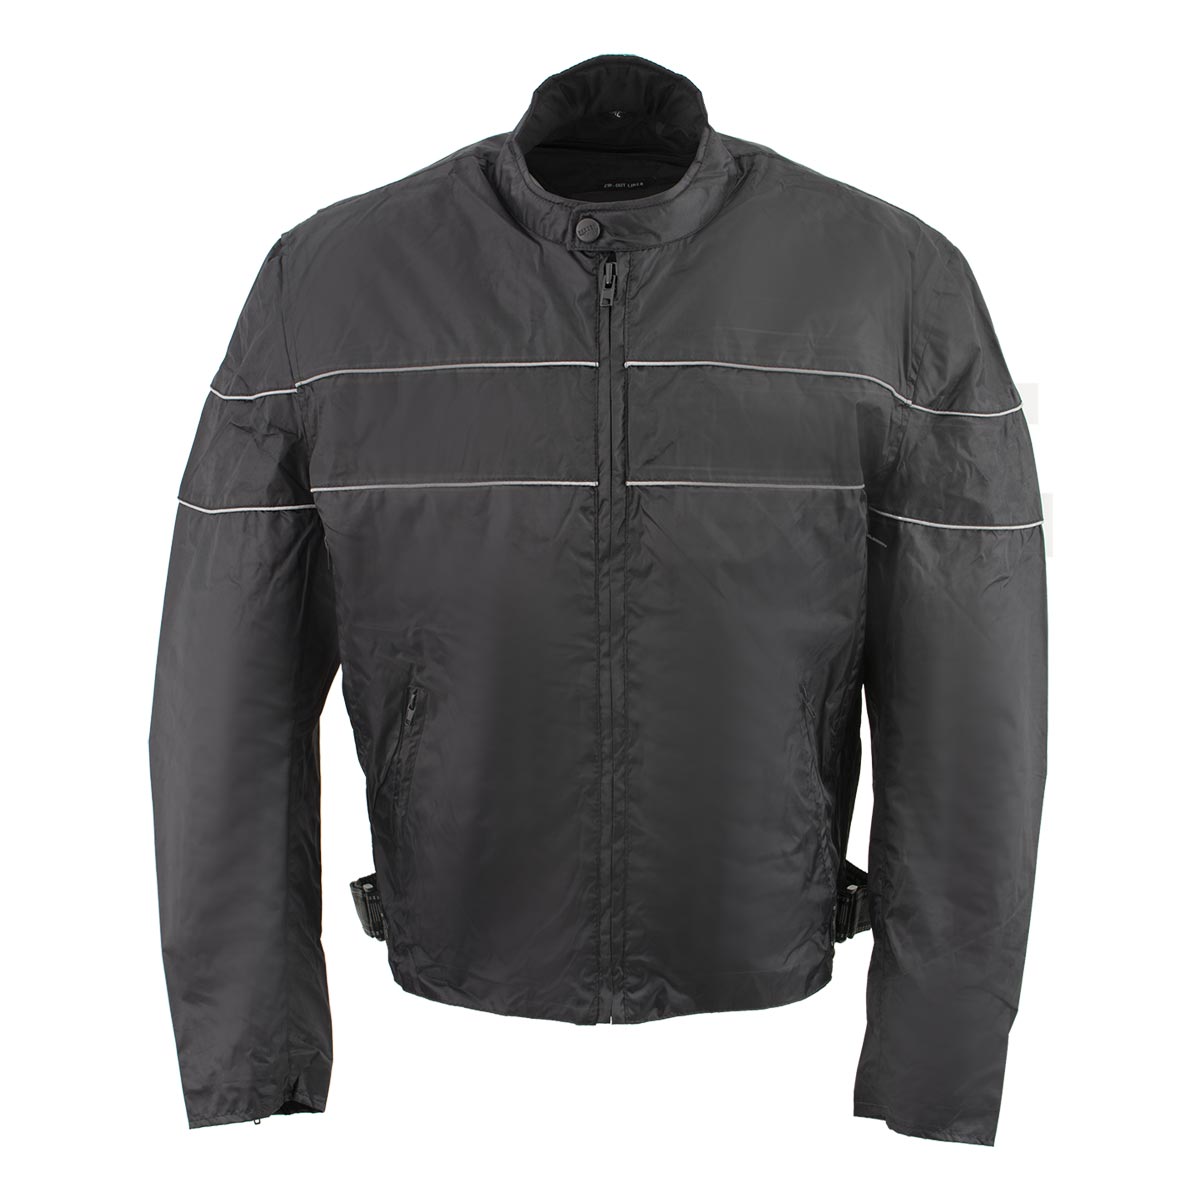 NexGen HW212102 Men's Black Nylon-Textile Vented Moto Jacket with Reflective Piping